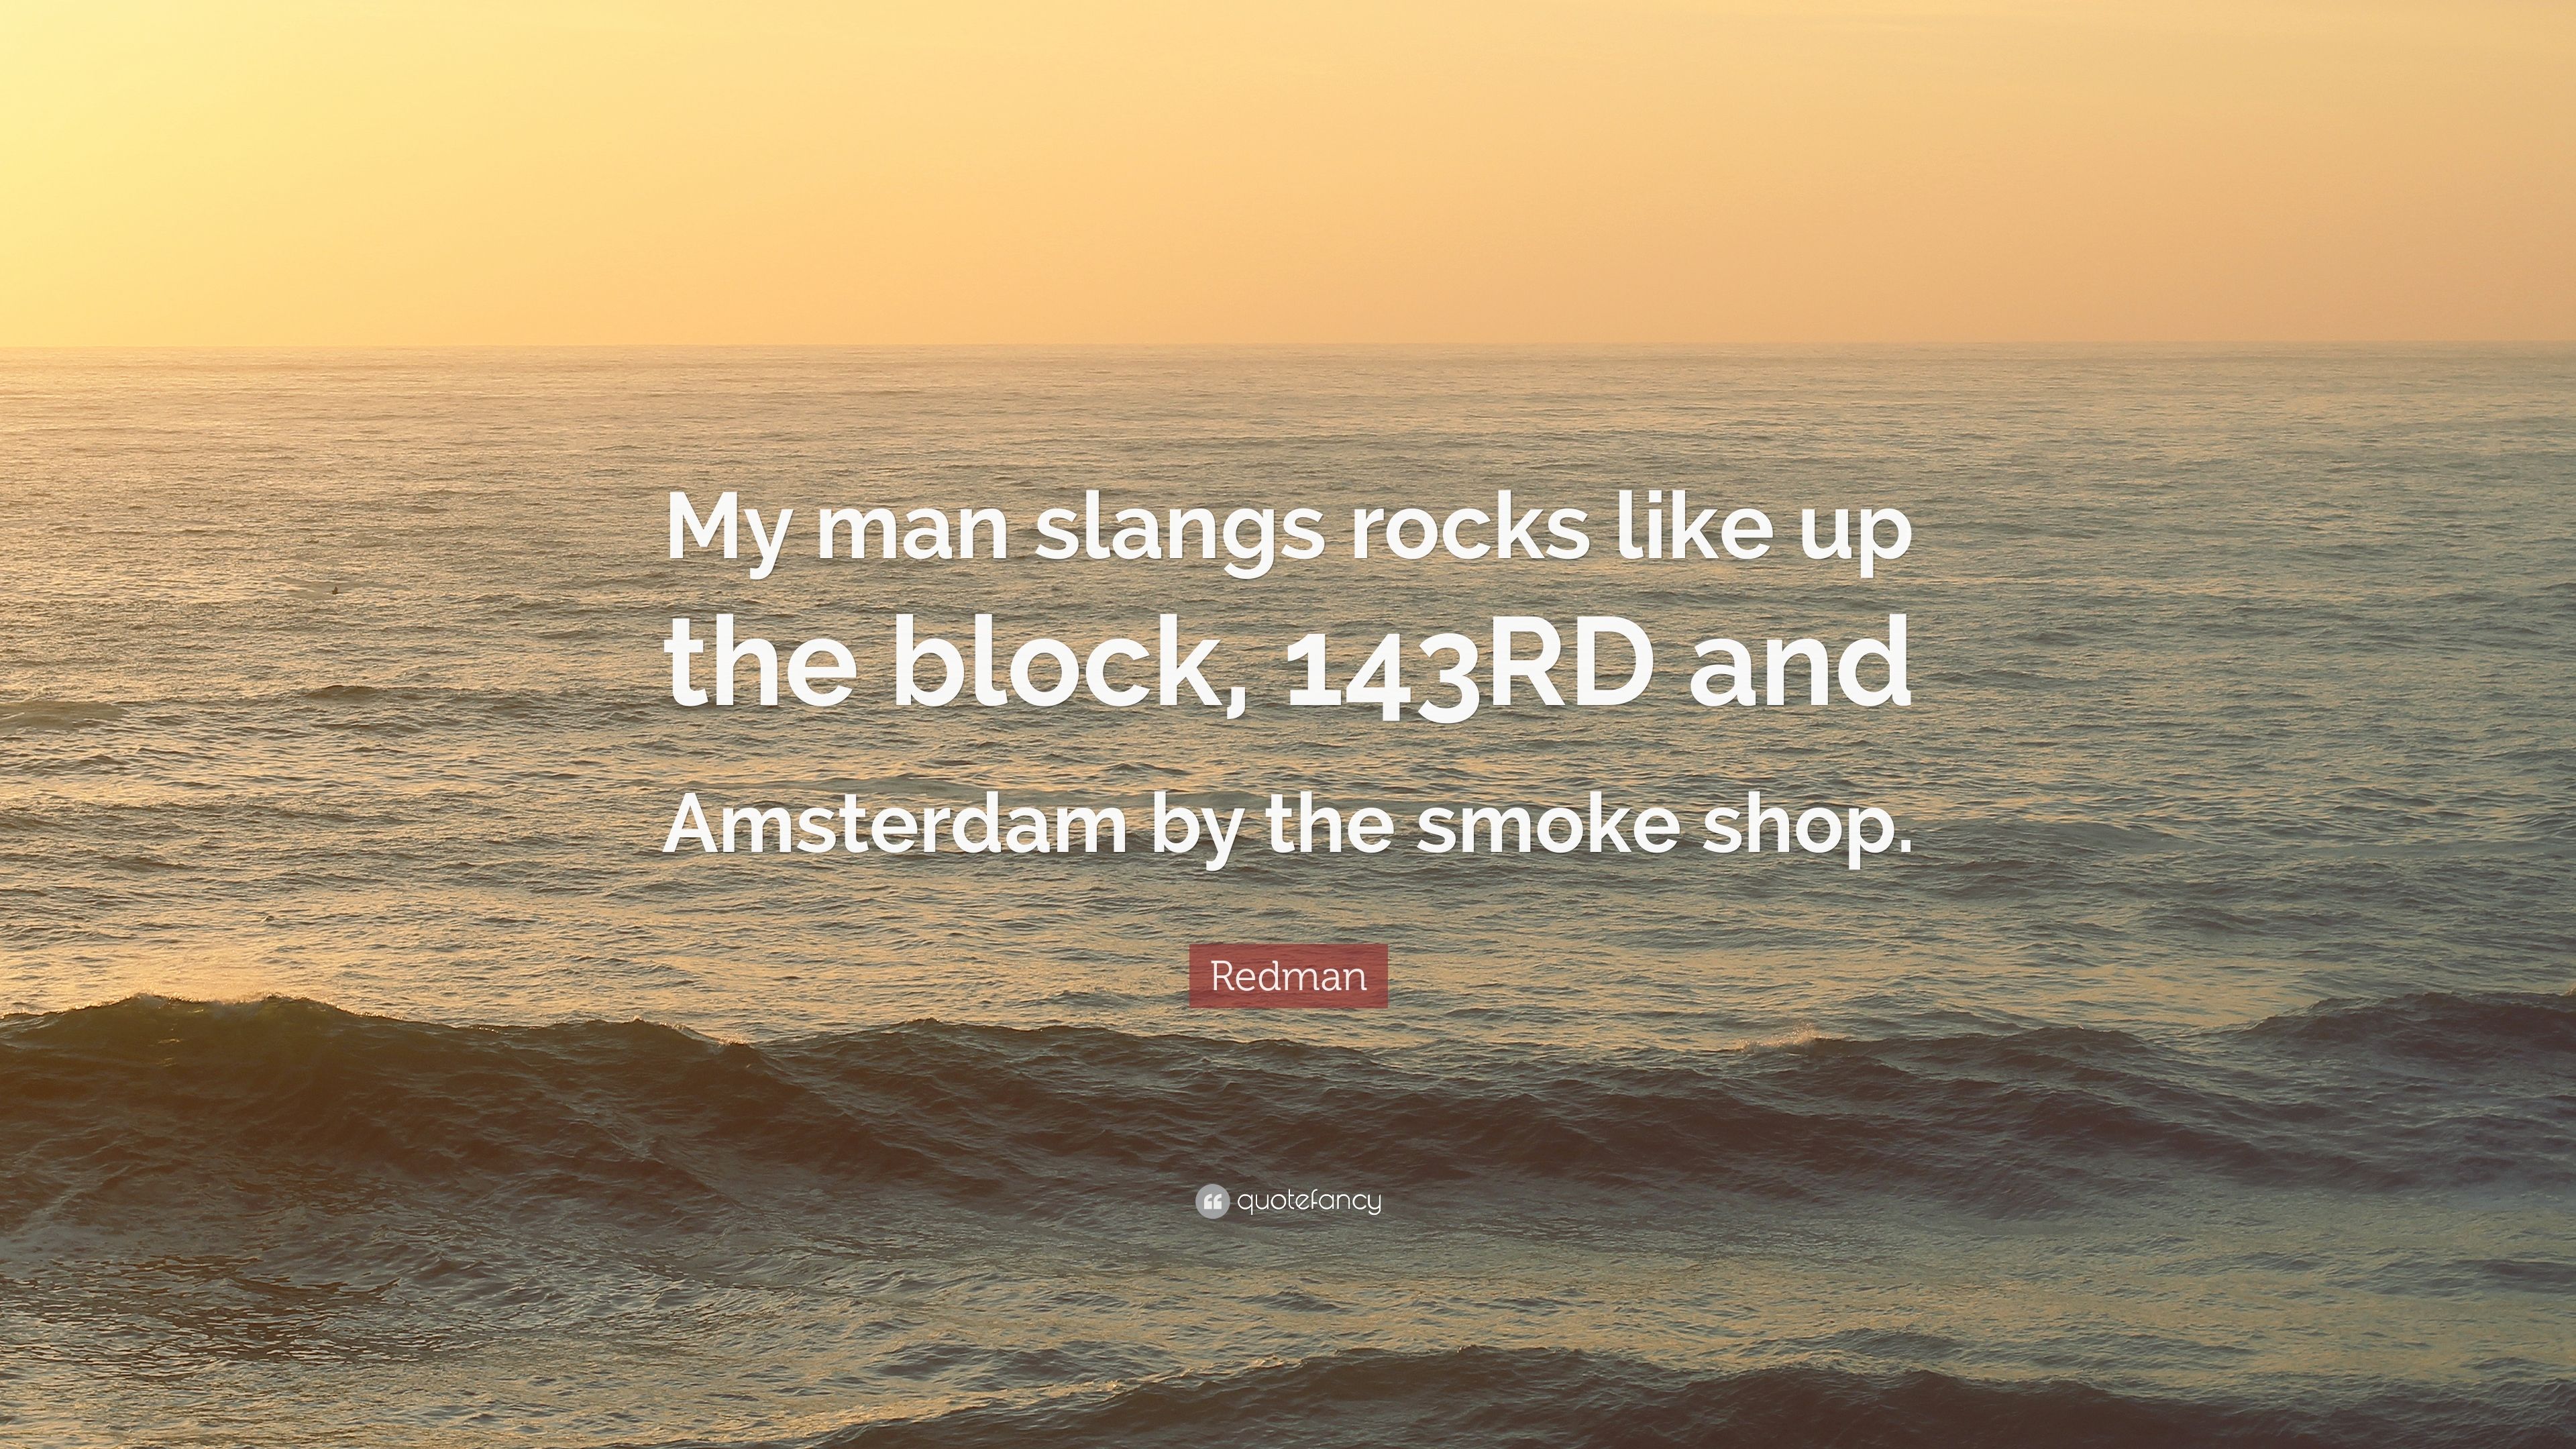 Redman Quote: “My man slangs rocks like up the block, 143RD